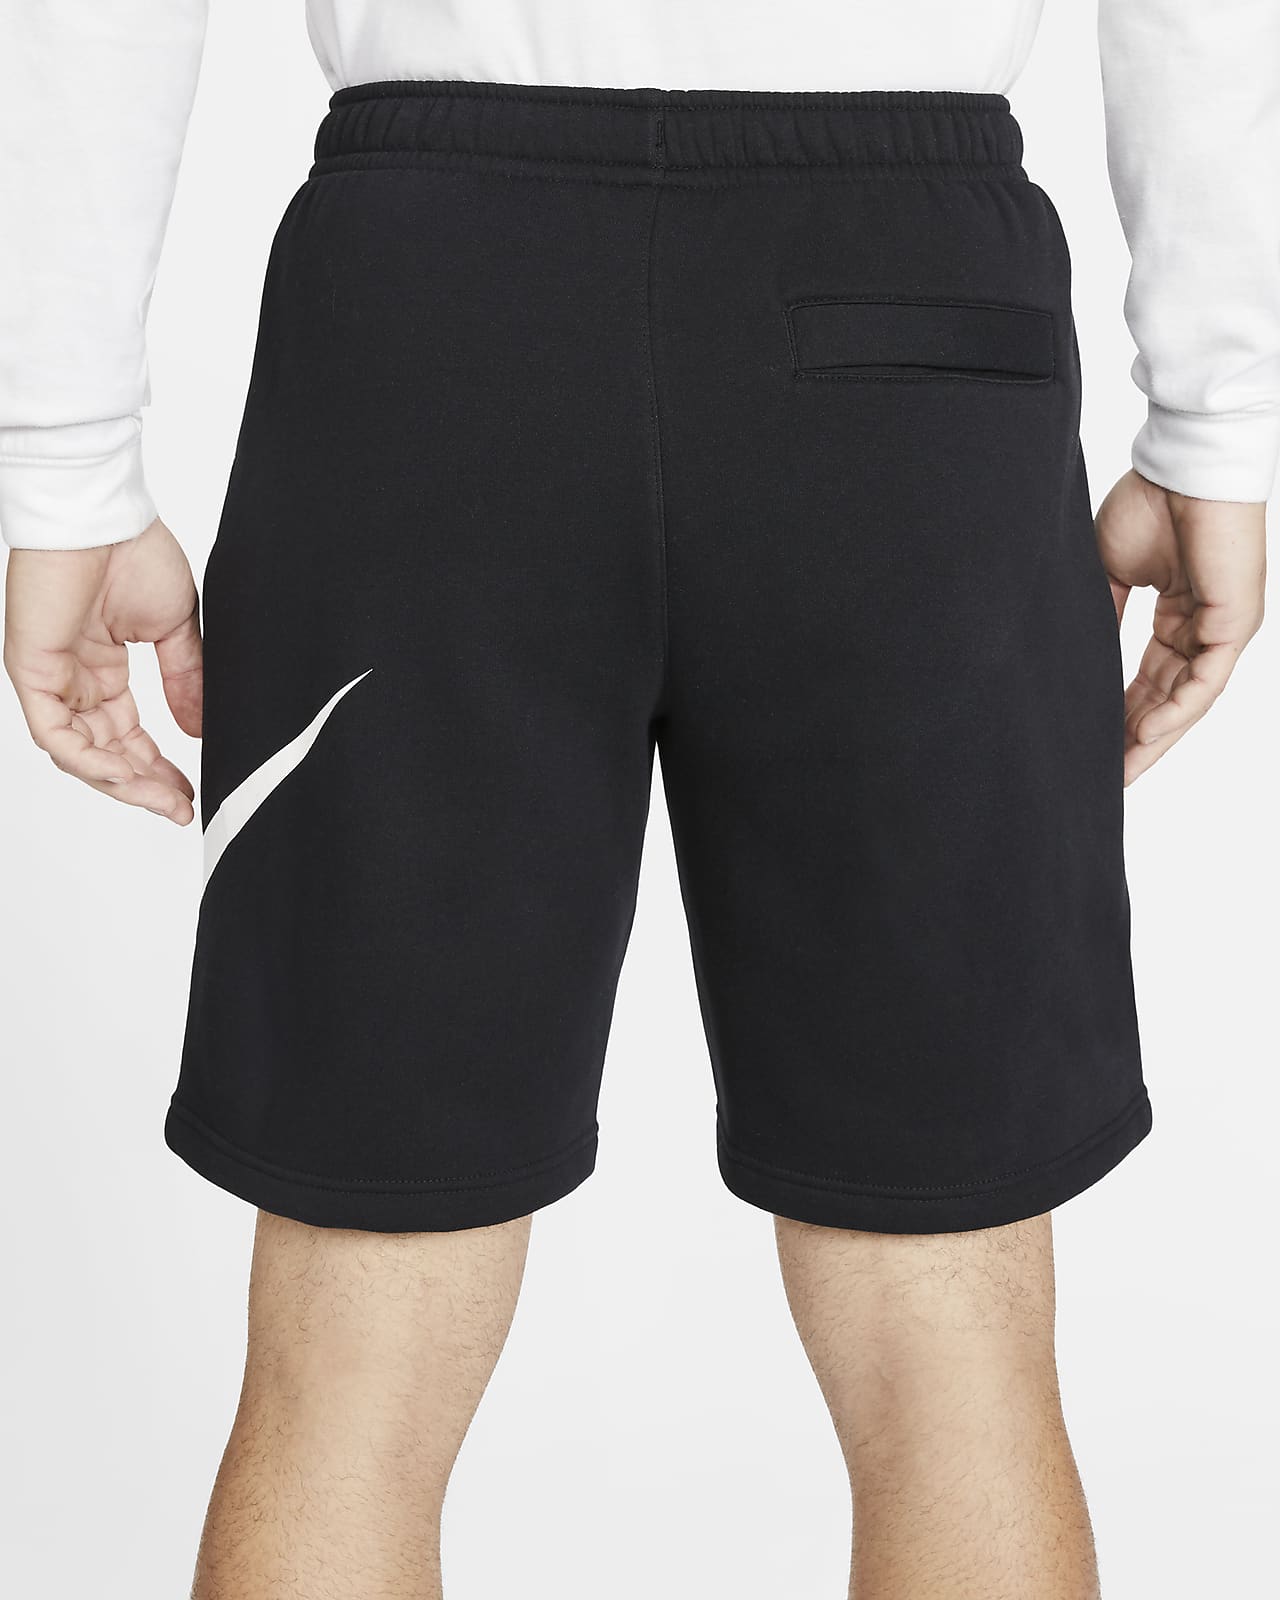 Shorts Tight Nike Fast Masculino Cj7851-010 - Starki